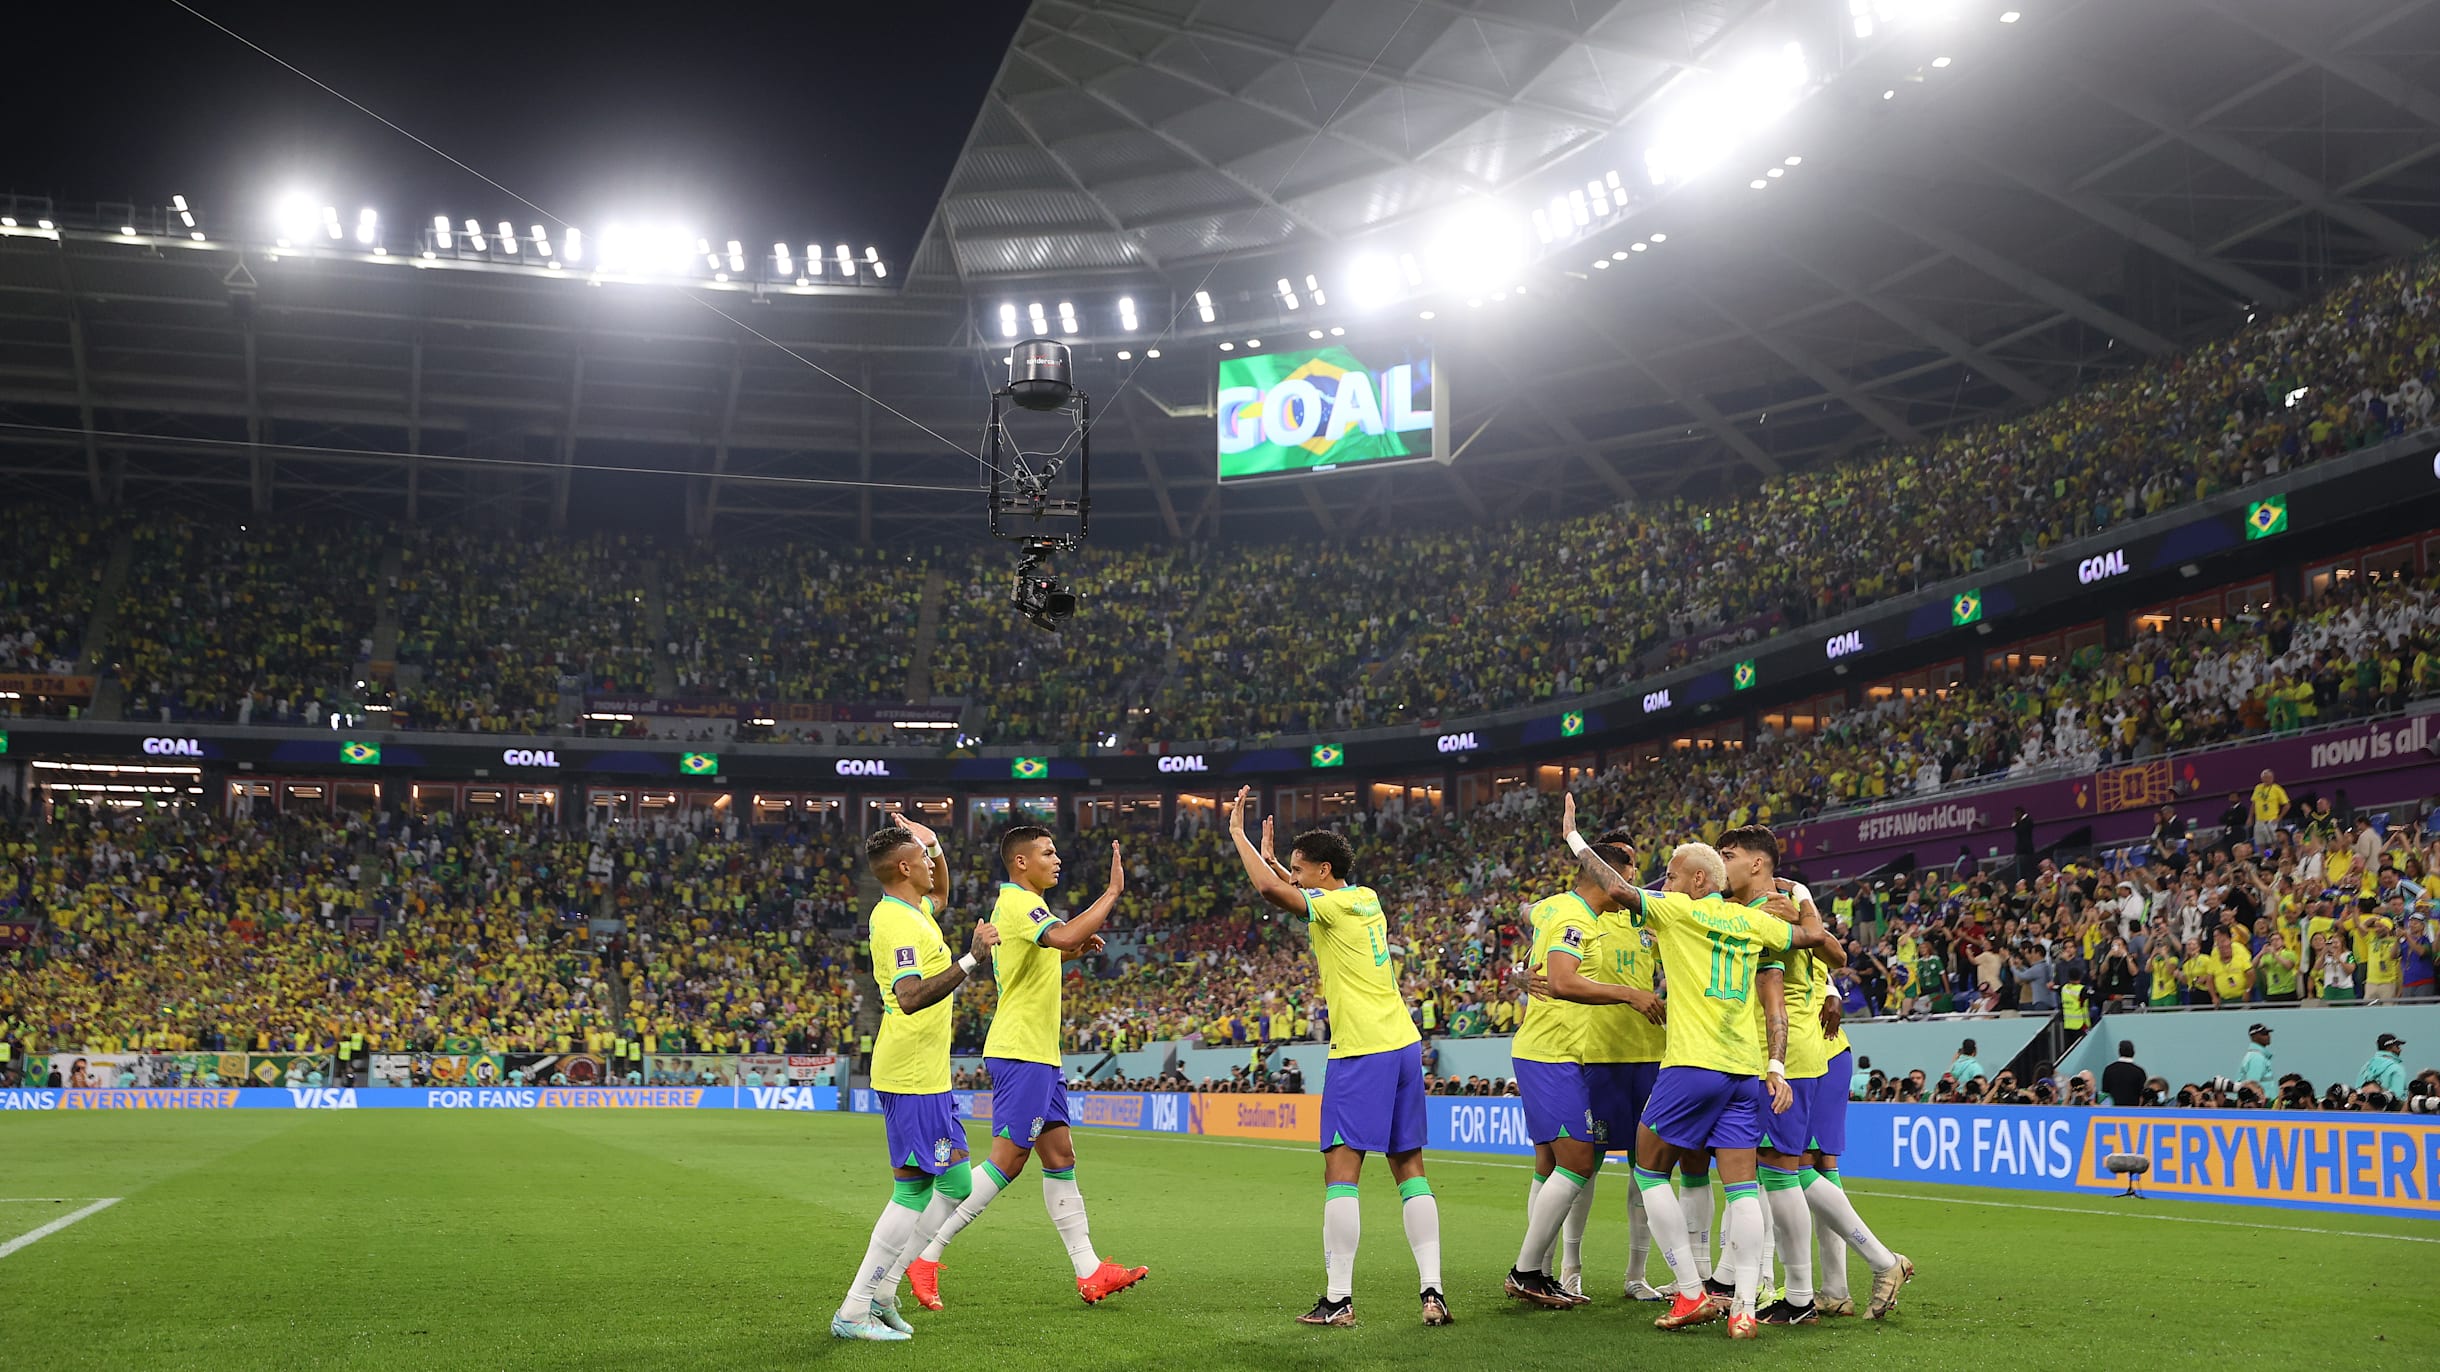  World Cup 2014 Brazil Official Match Football Replica Size 5 :  Sports & Outdoors